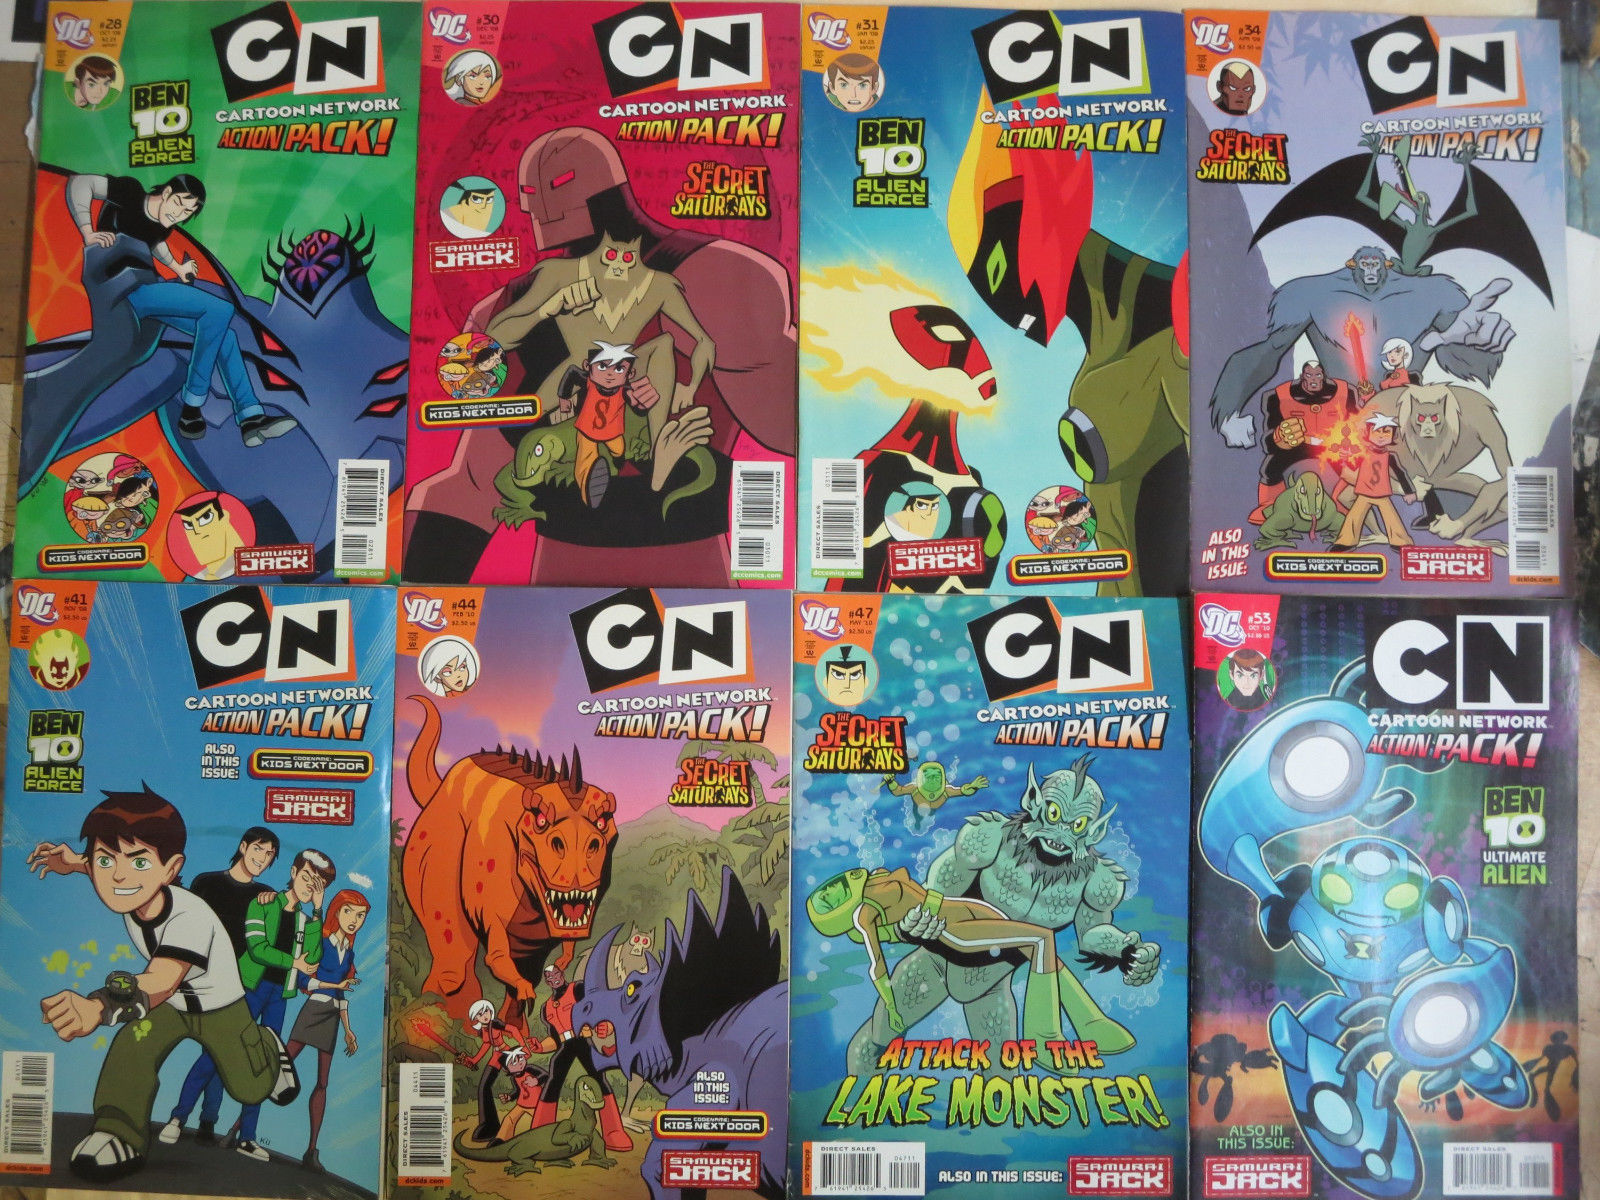 Ben 10 Comic Review nr 66: Cartoon Network Action Pack #62 - Jail